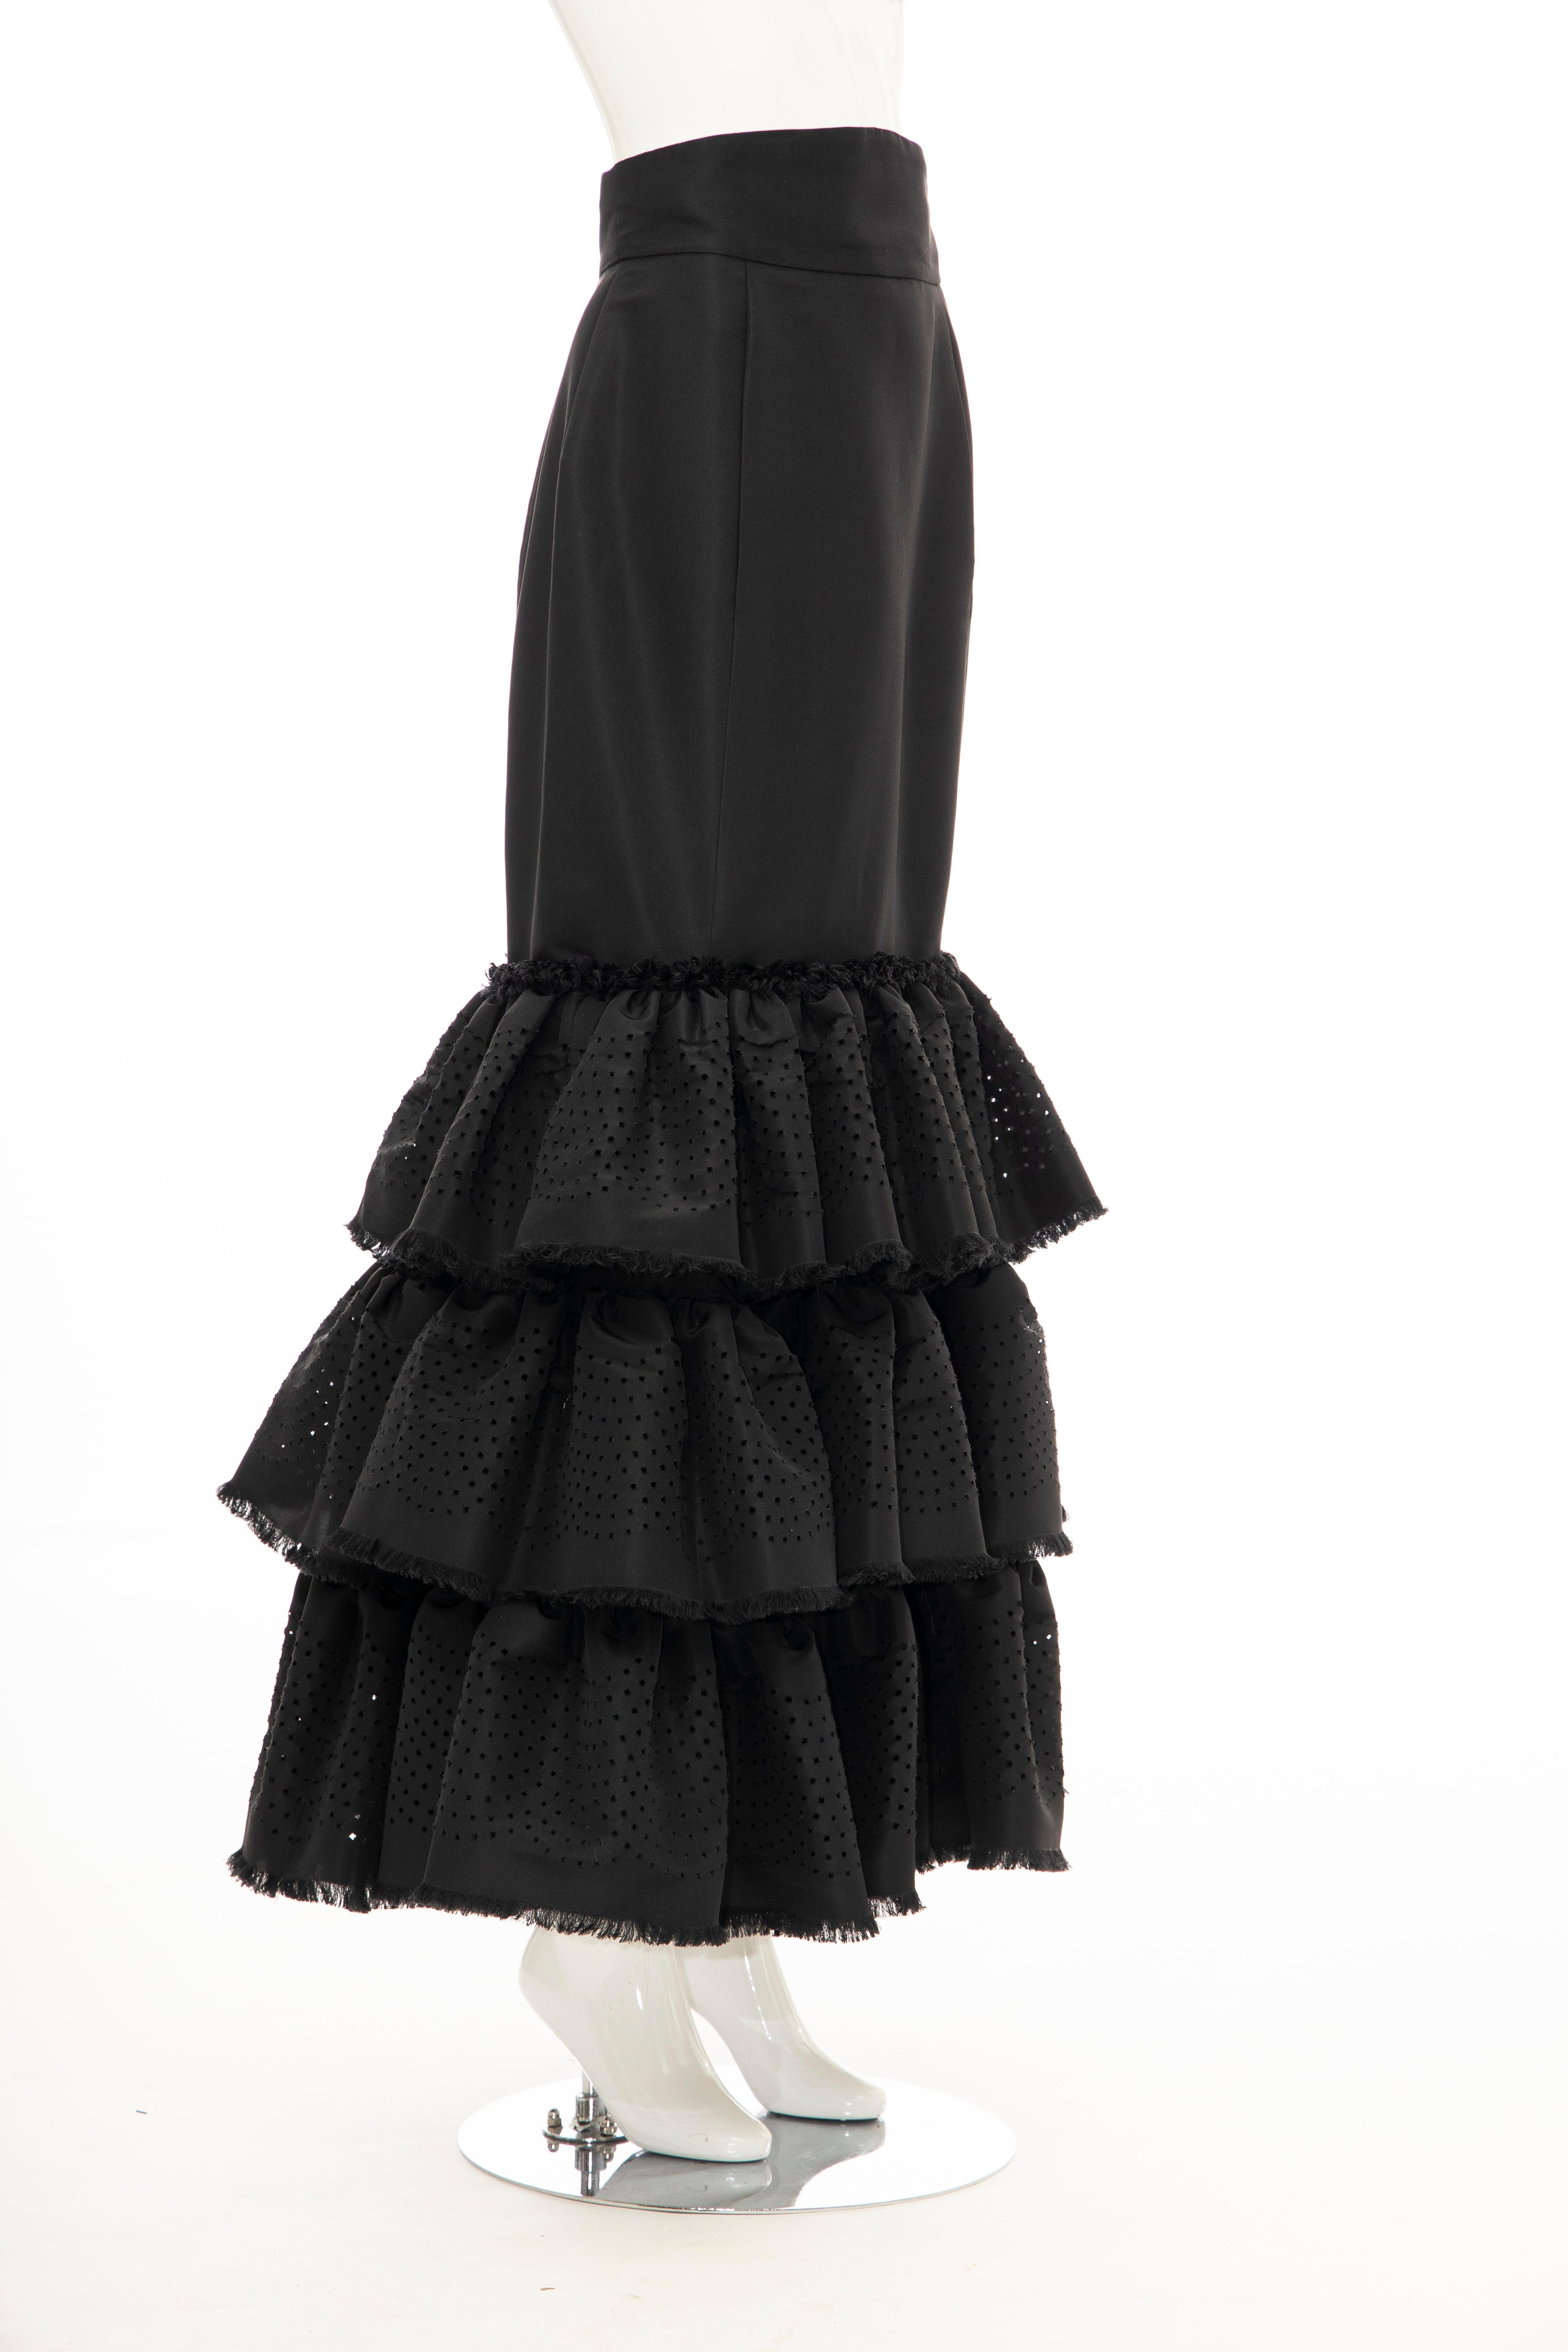 Oscar de la Renta Black Punched Silk Faille Evening Skirt, Fall 2001 For Sale 3